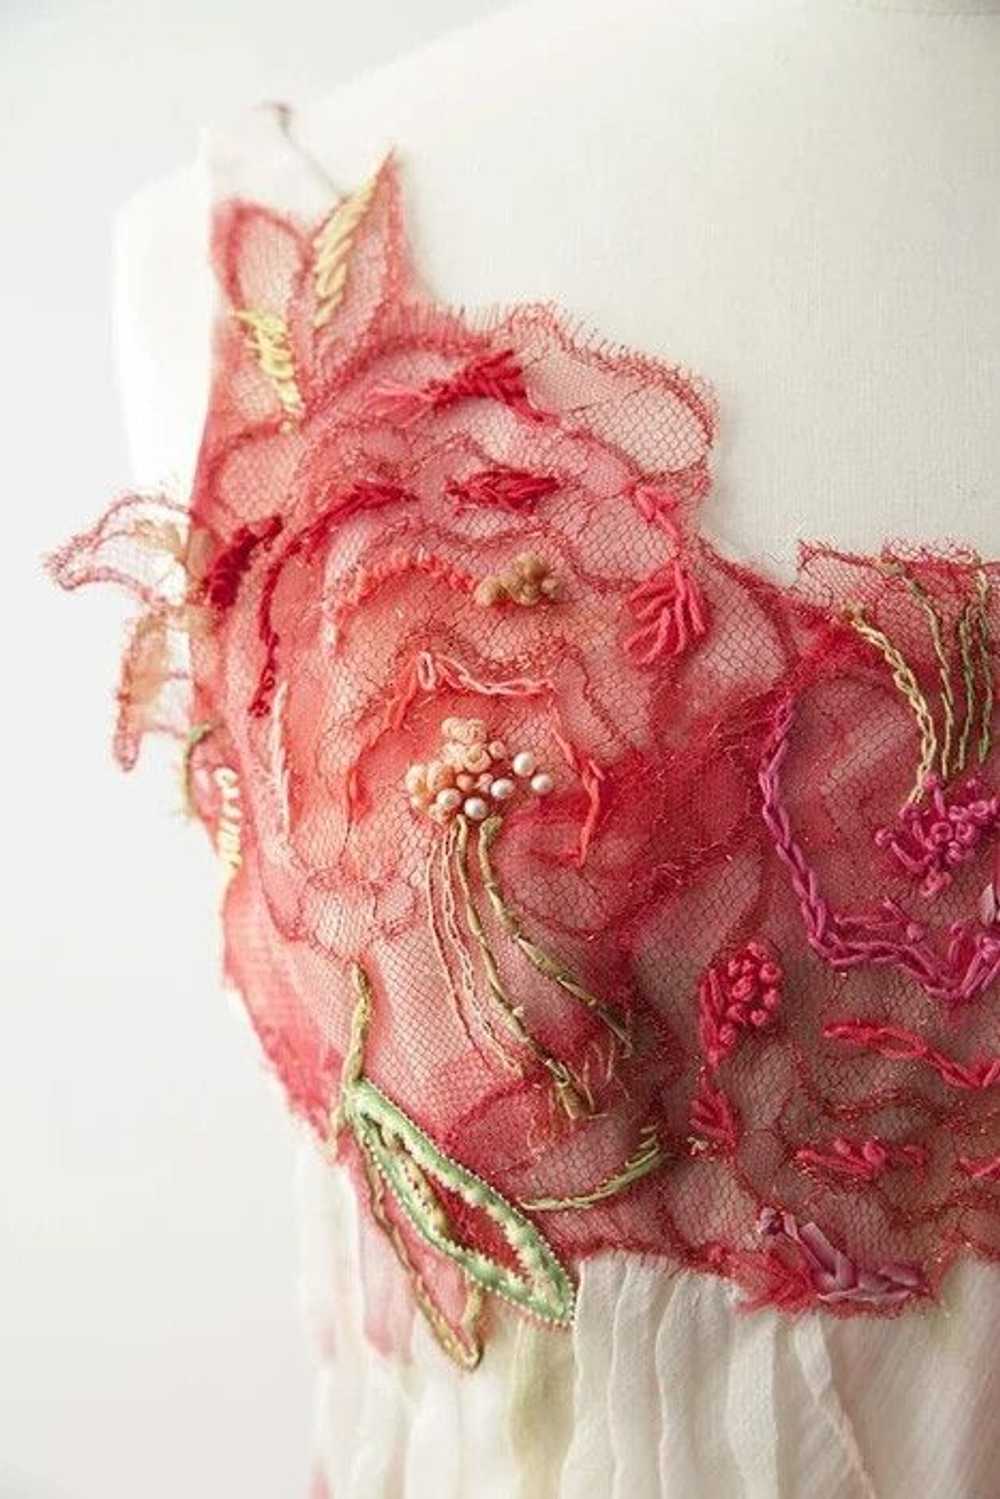 Barney Cools Couture à porter flower dress - image 5